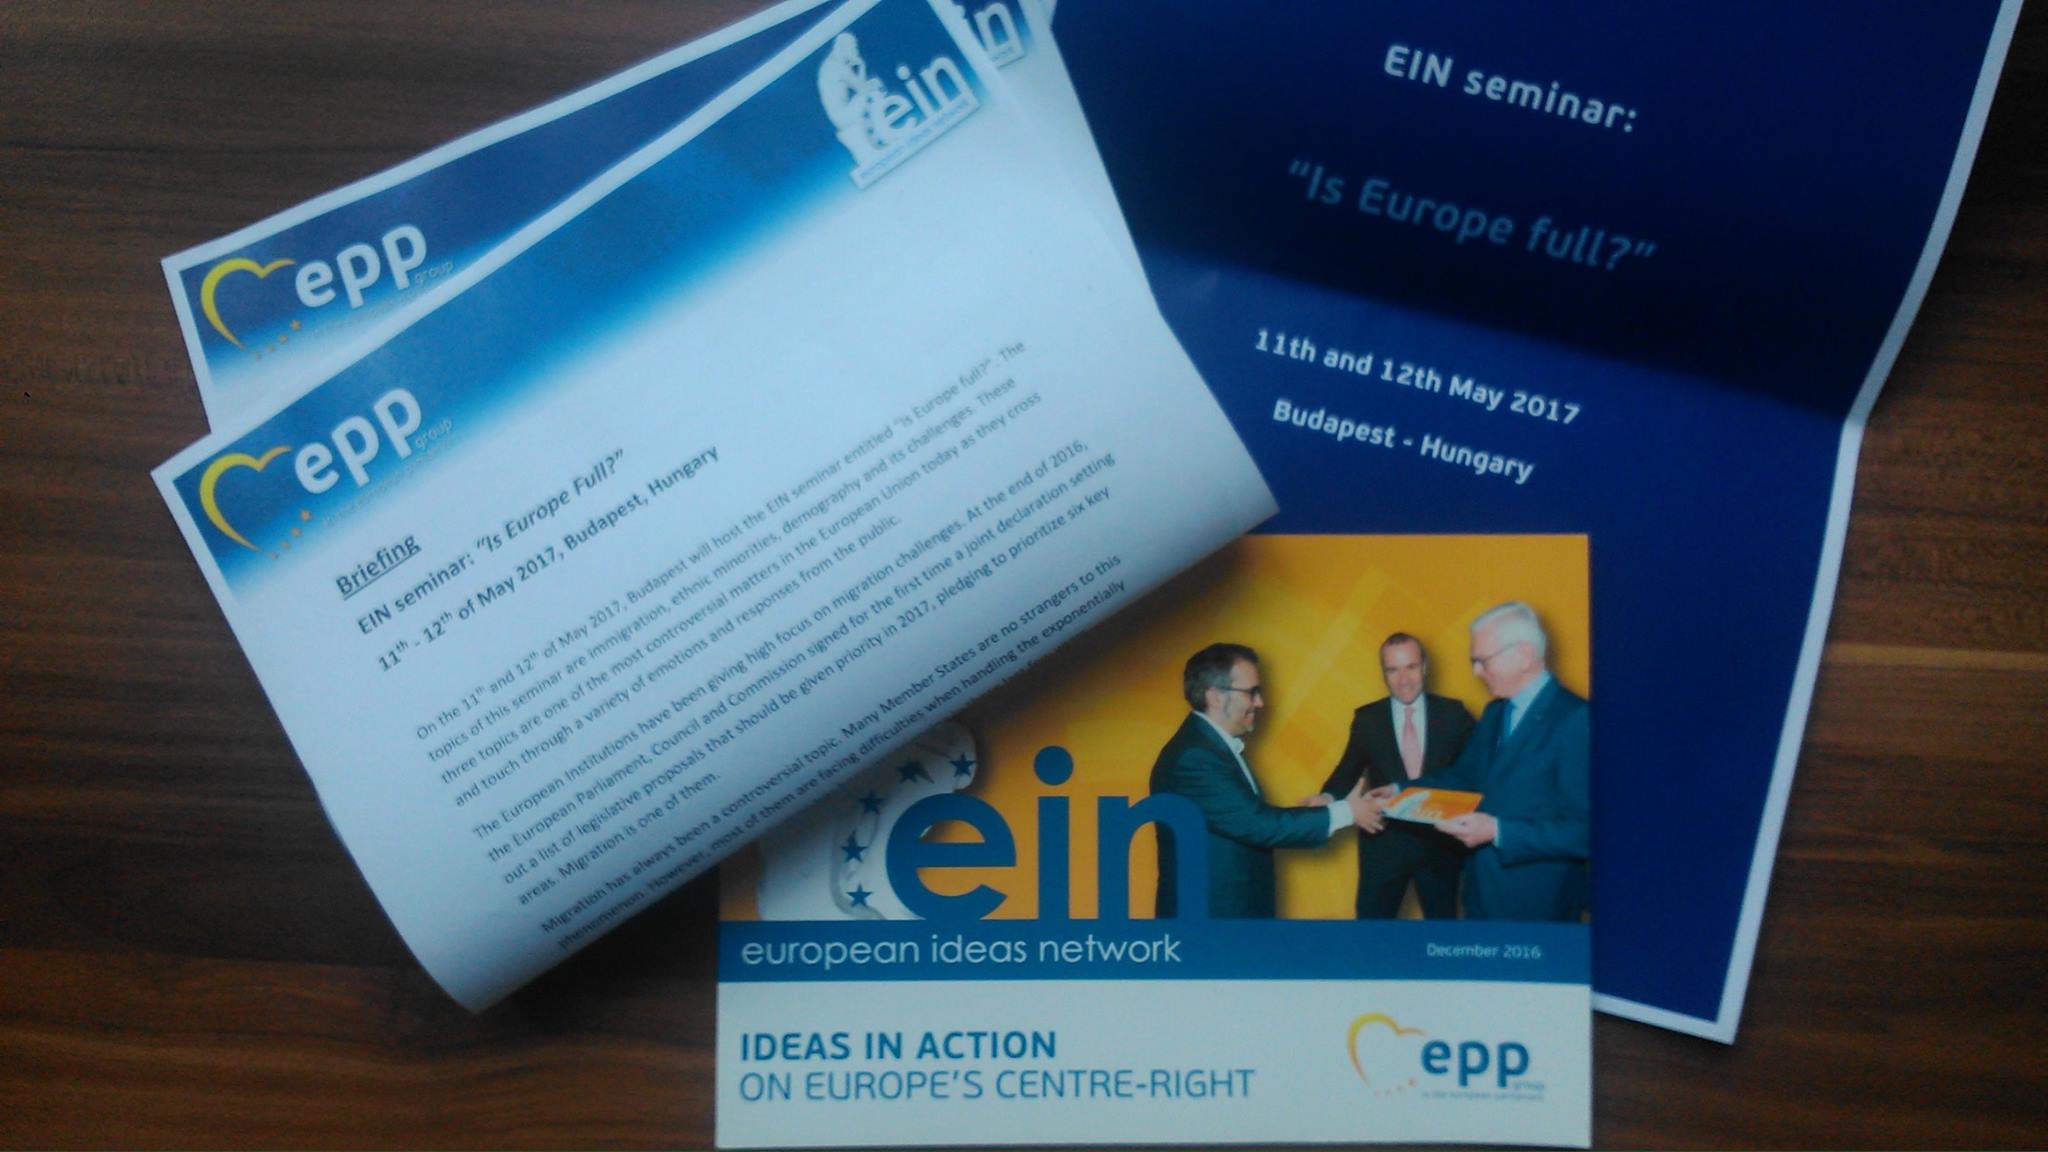 European Ideas Network - Is Europe Full?